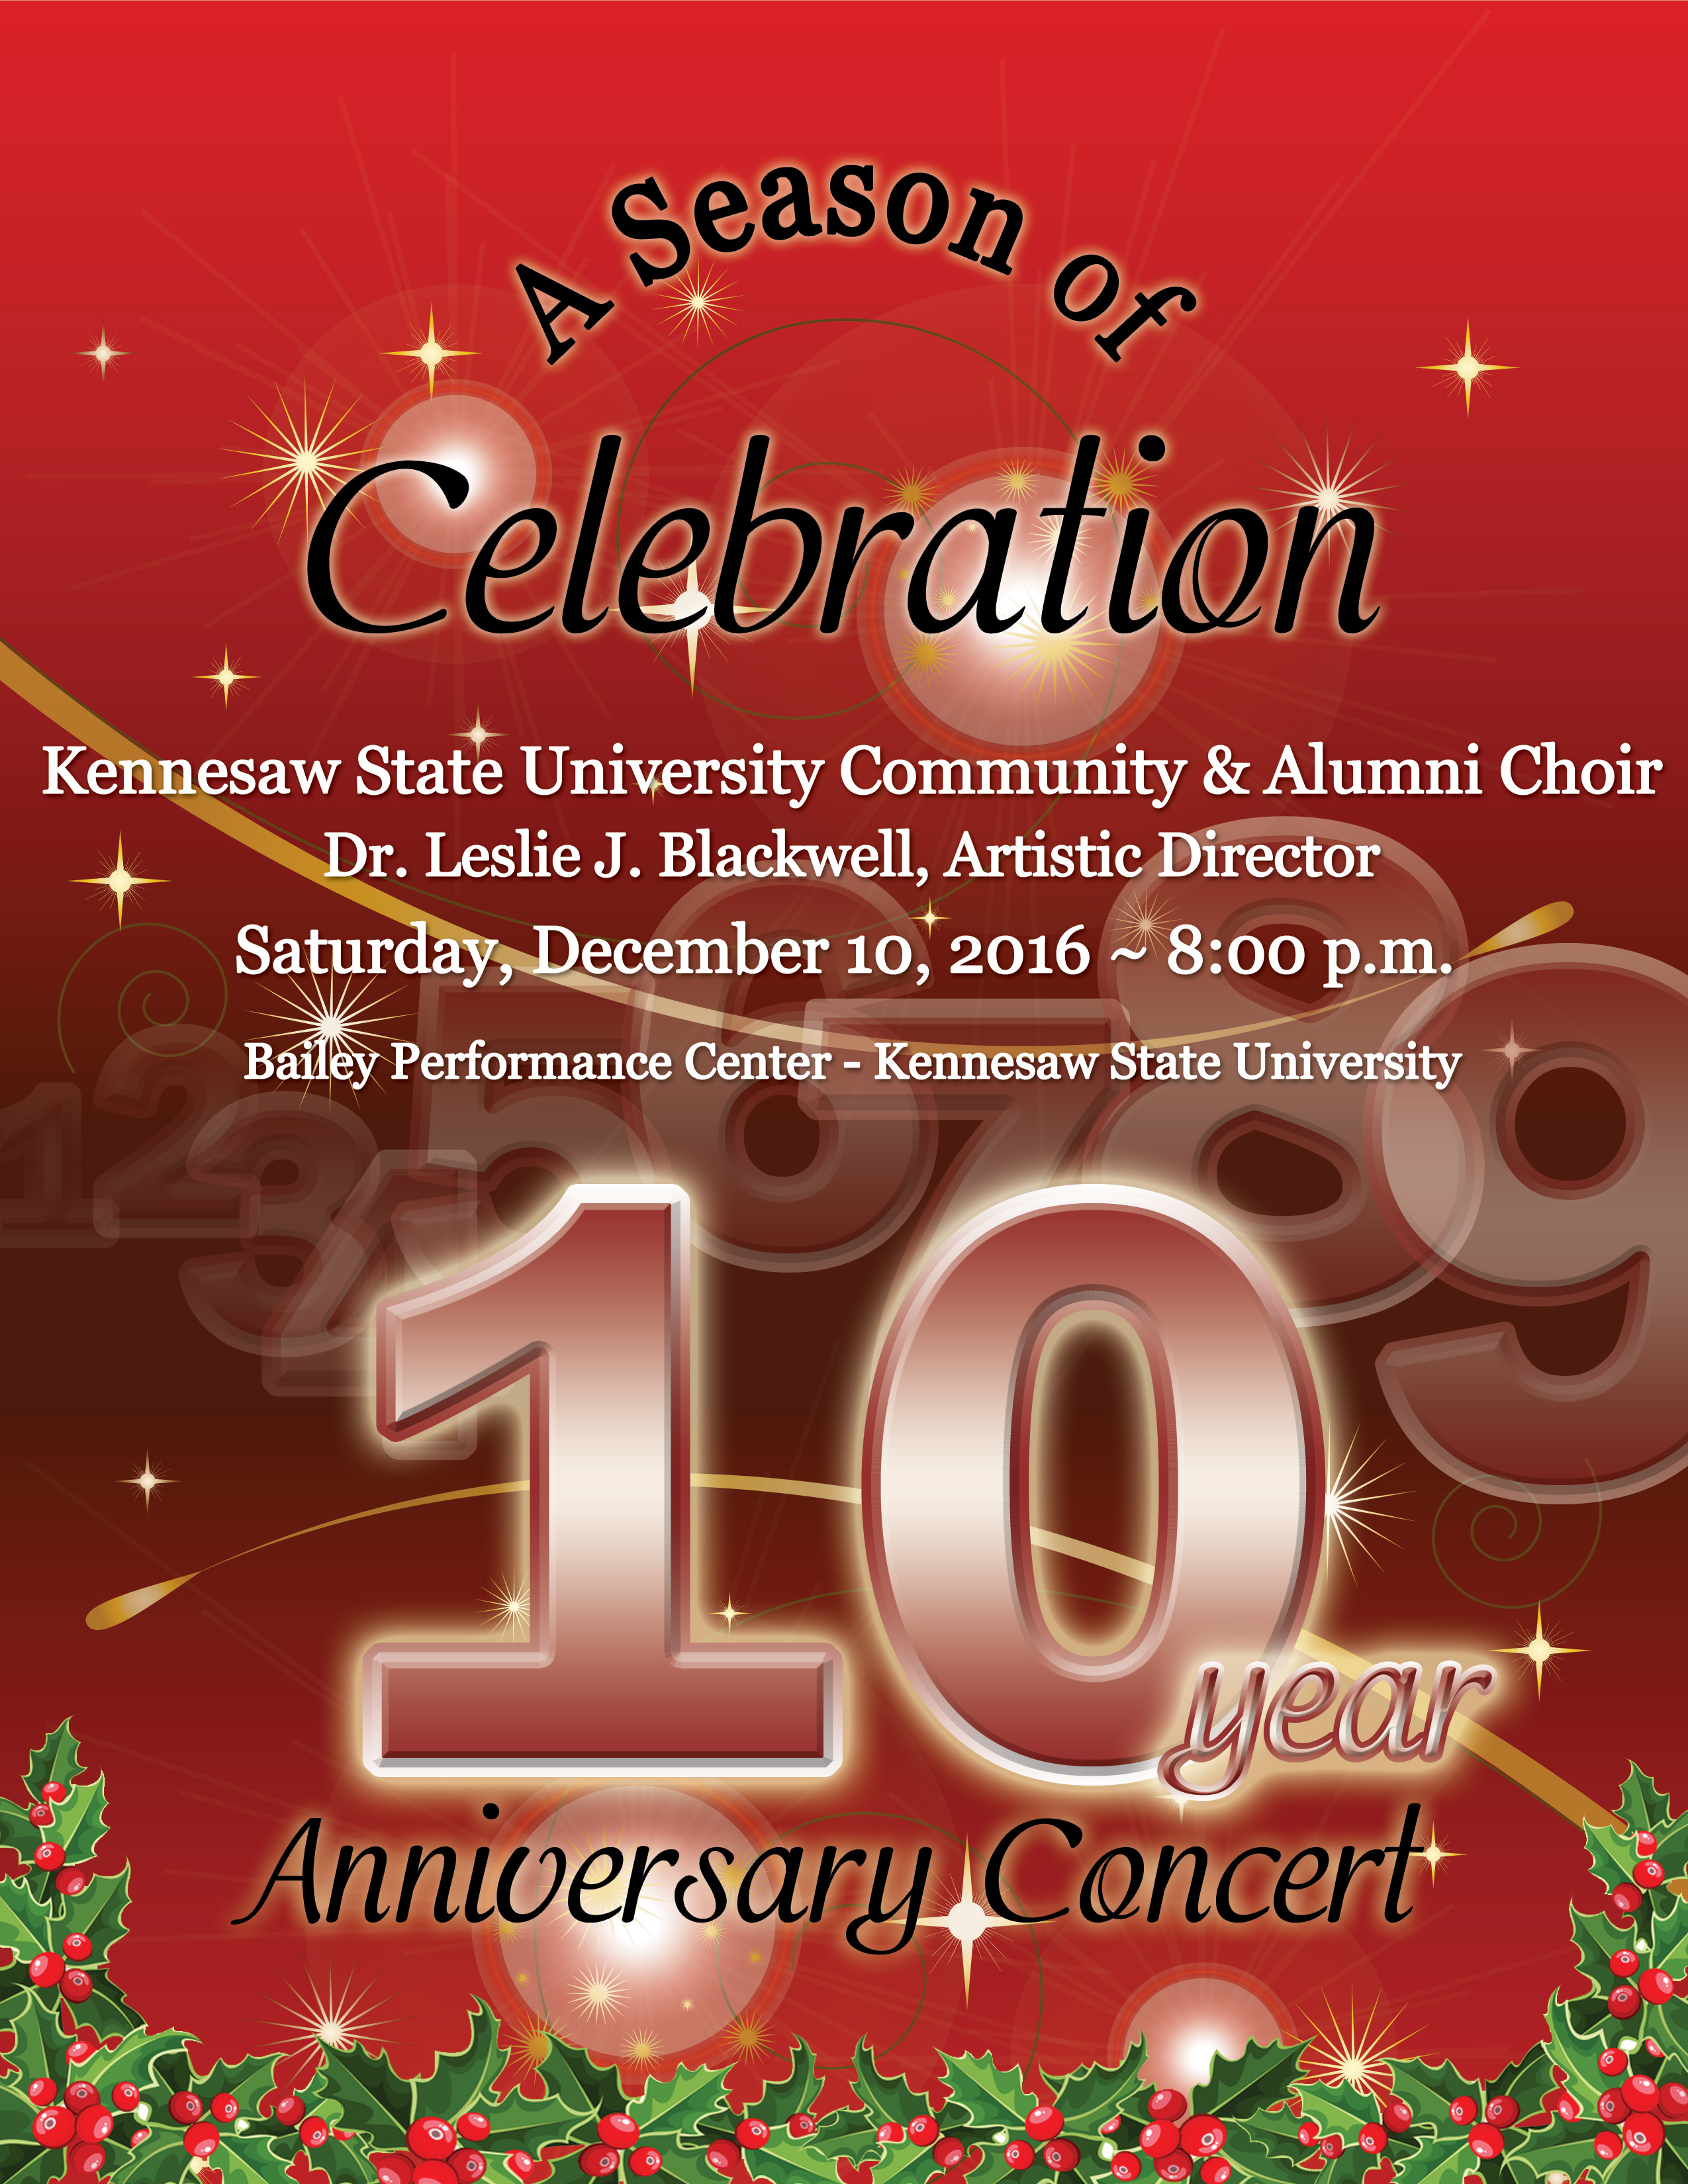 A Season of Celebration - 10 year Anniversary Concert